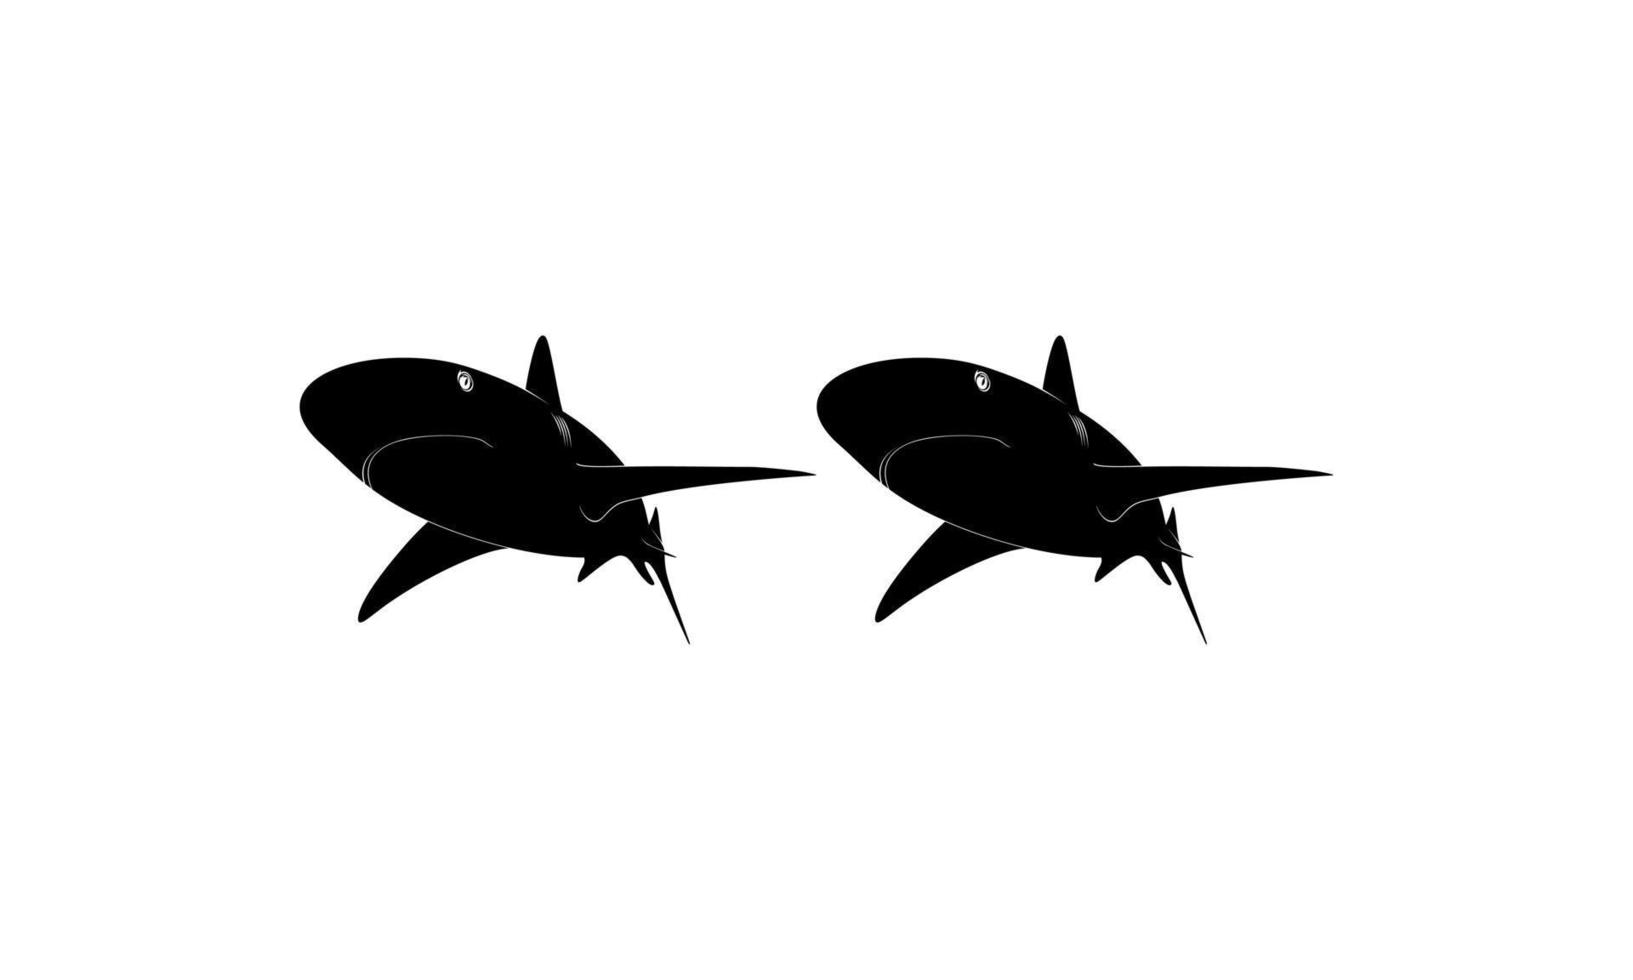 silueta de tiburón para logotipo, pictograma, sitio web, ilustración de arte, infografía o elemento de diseño gráfico. ilustración vectorial vector